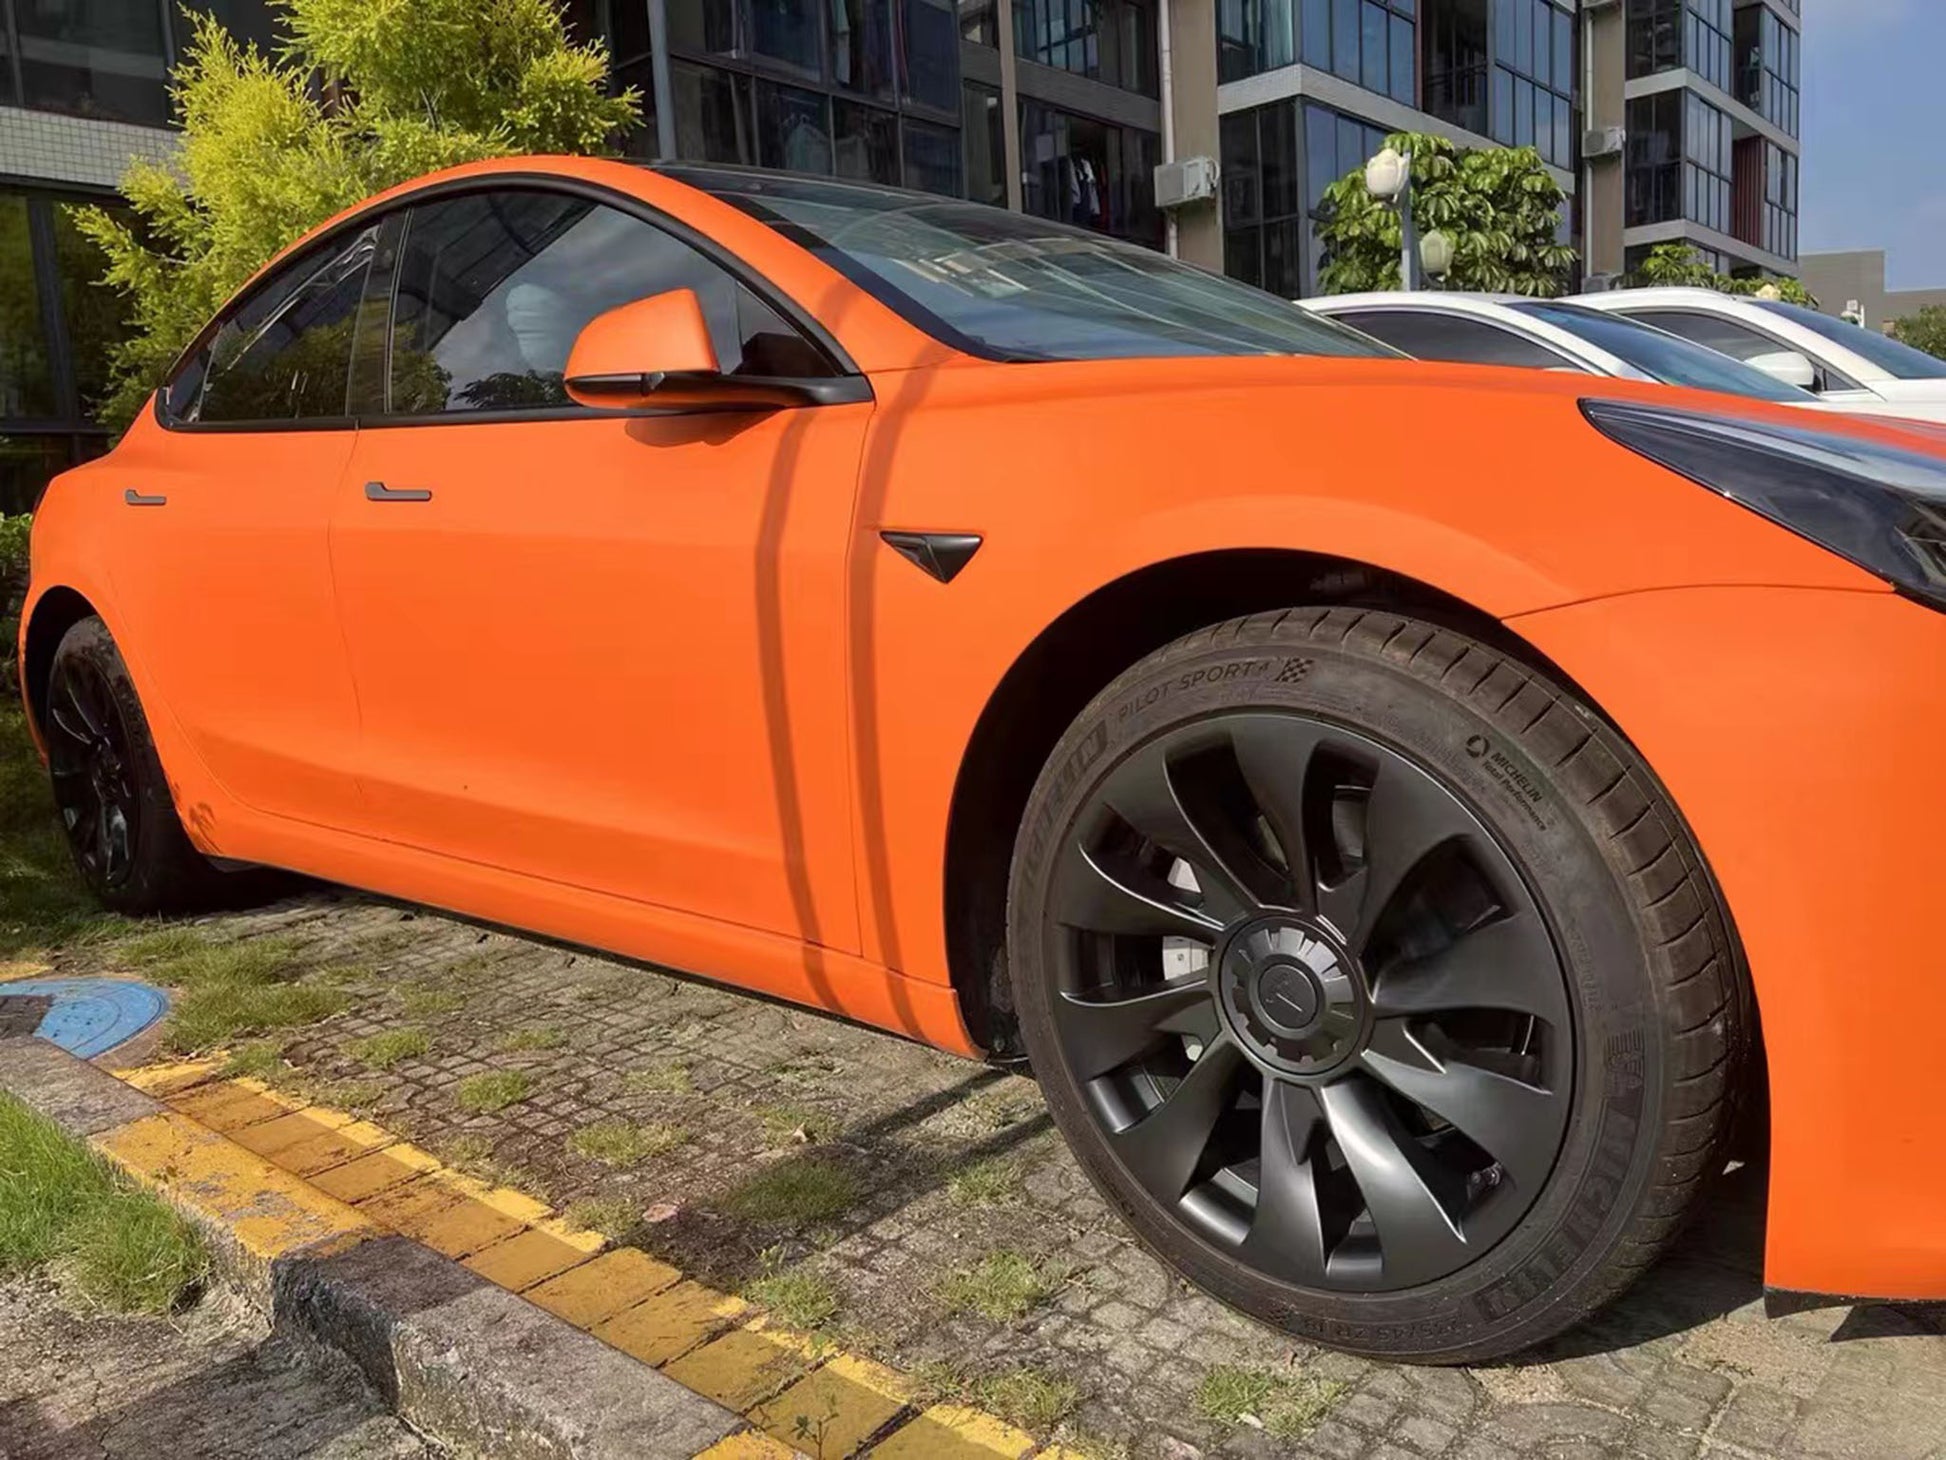 18 inch Wheel Covers For Tesla Model 3